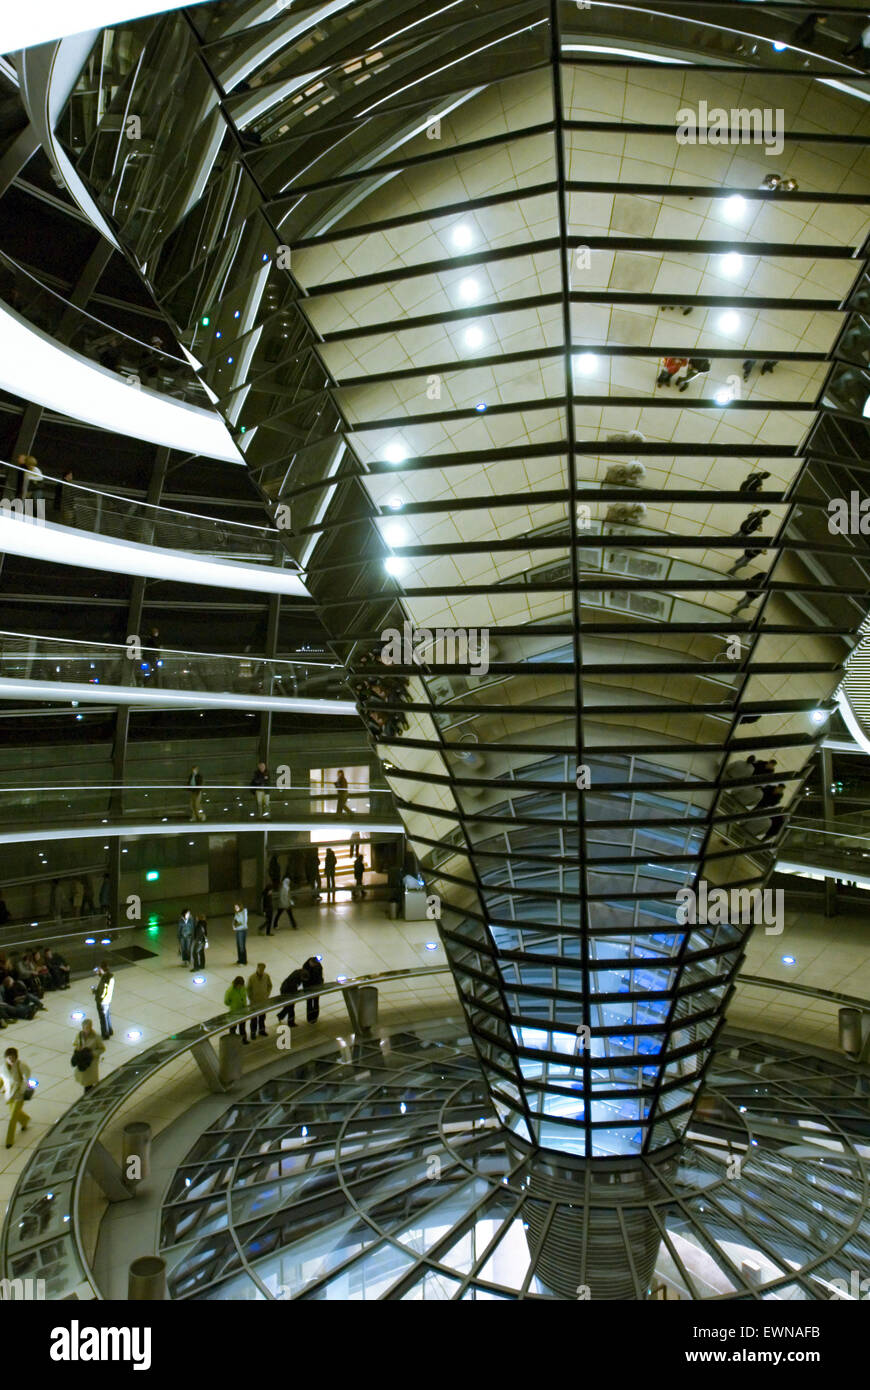 Reichstagkuppel la nuit, coupole en verre du gouvernement allemand architecte Sir Norman Foster Berlin Allemagne Europe Banque D'Images